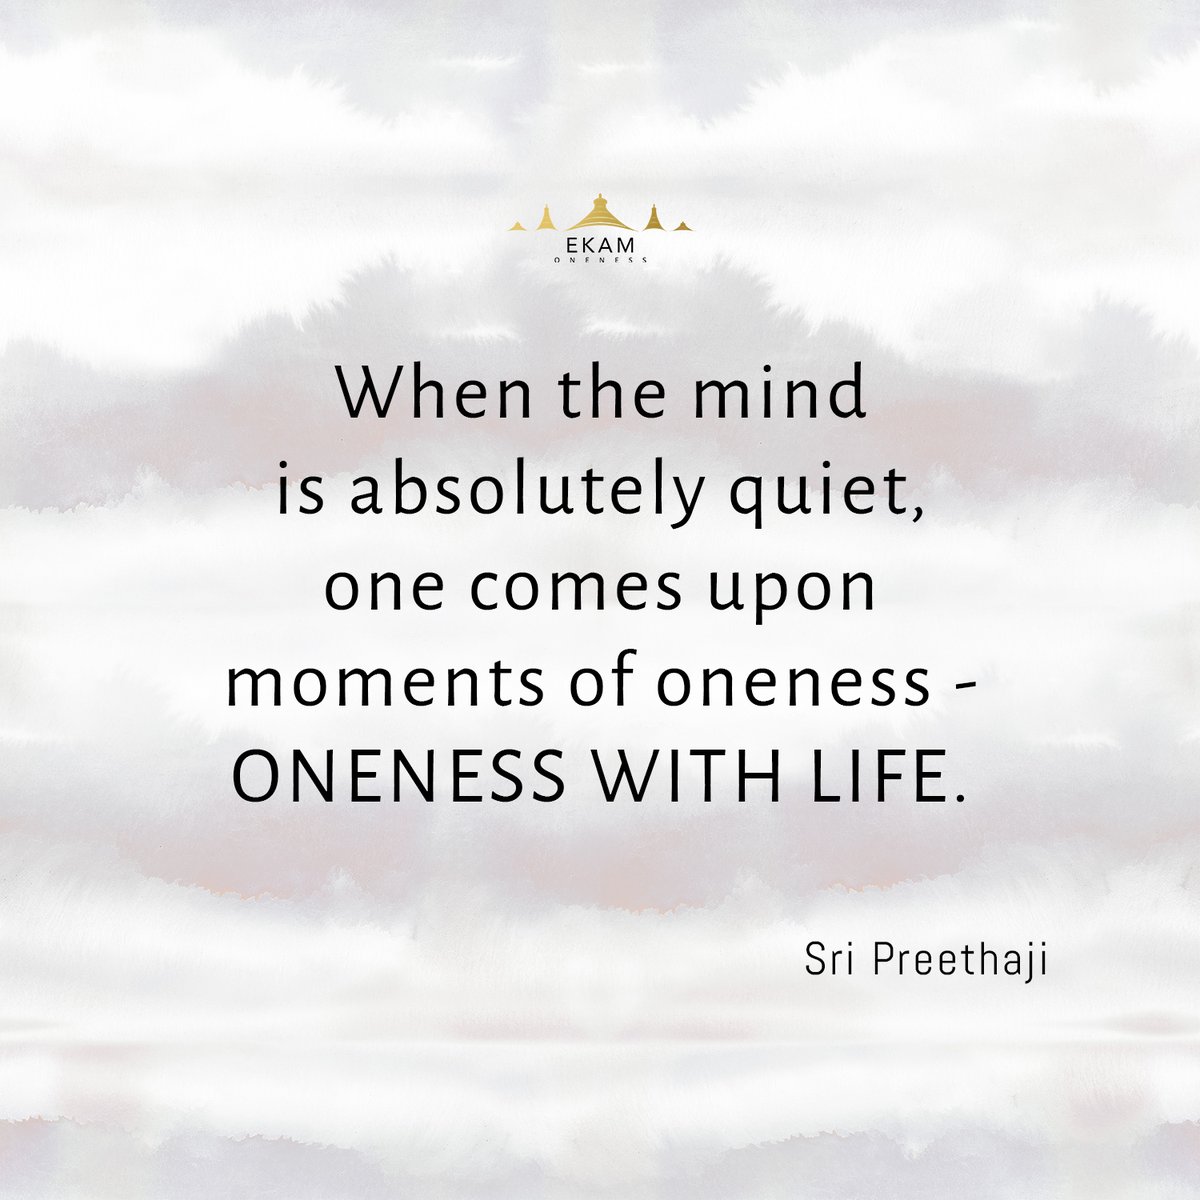 #QuietMind #OnenessWithLife #InnerSerenity #EmbracingExistence #HarmonyWithin #Mindfulness #PeacefulReflections #E2Live #ExperienceEnlightenment #SriPreethaji #pkconsciousness #ekam #oneness #ekamoneness